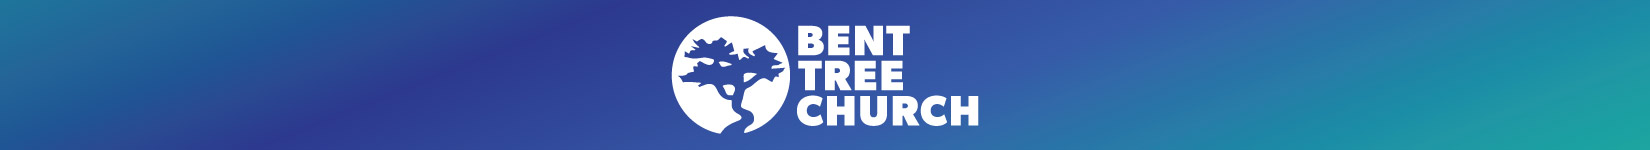 Bent Tree Church Online Store